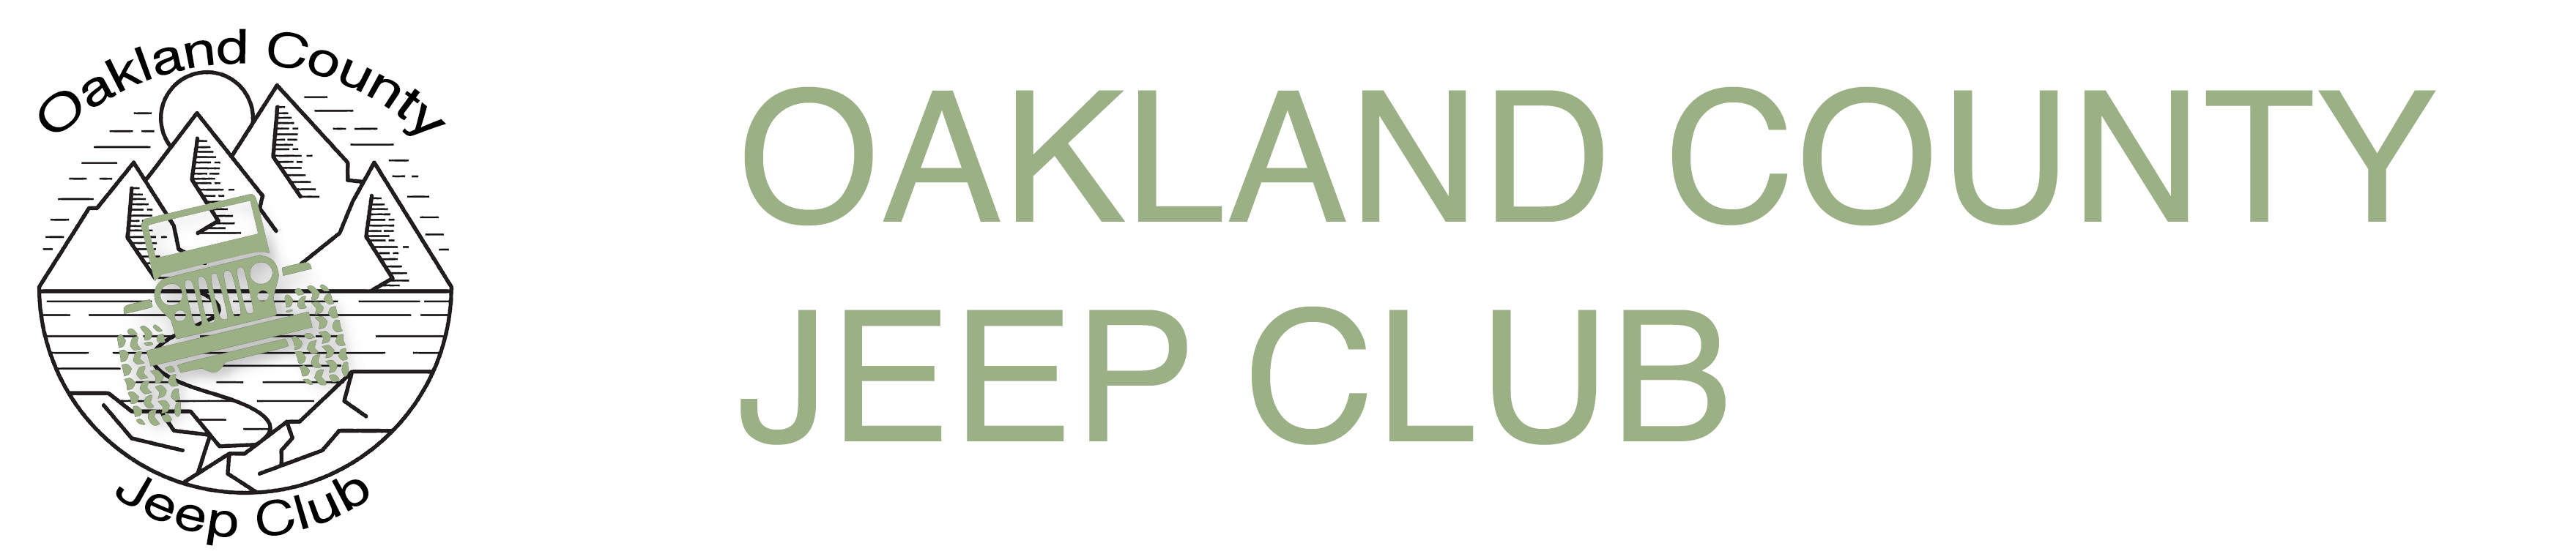 Oakland County Jeep Club